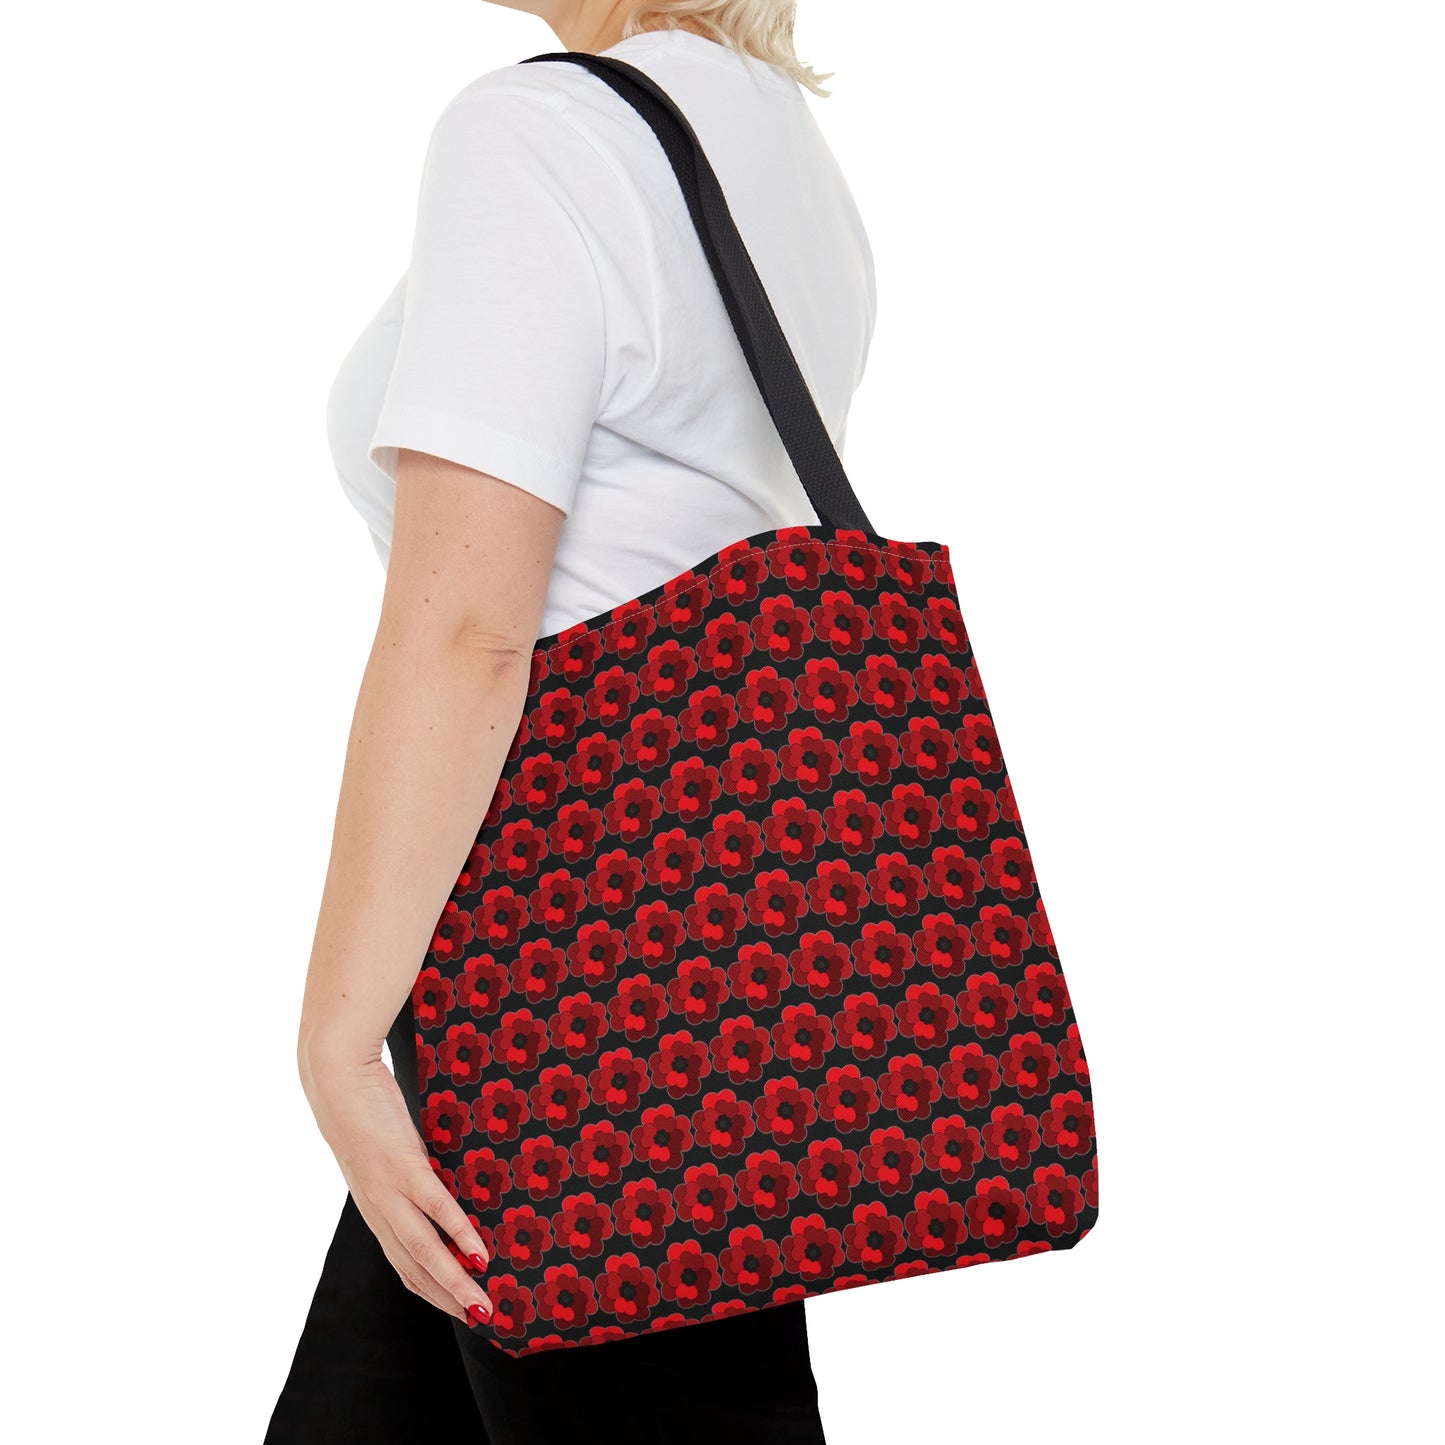 Red Hearts Flower - White Highlight - Black 000000 - Tote Bag